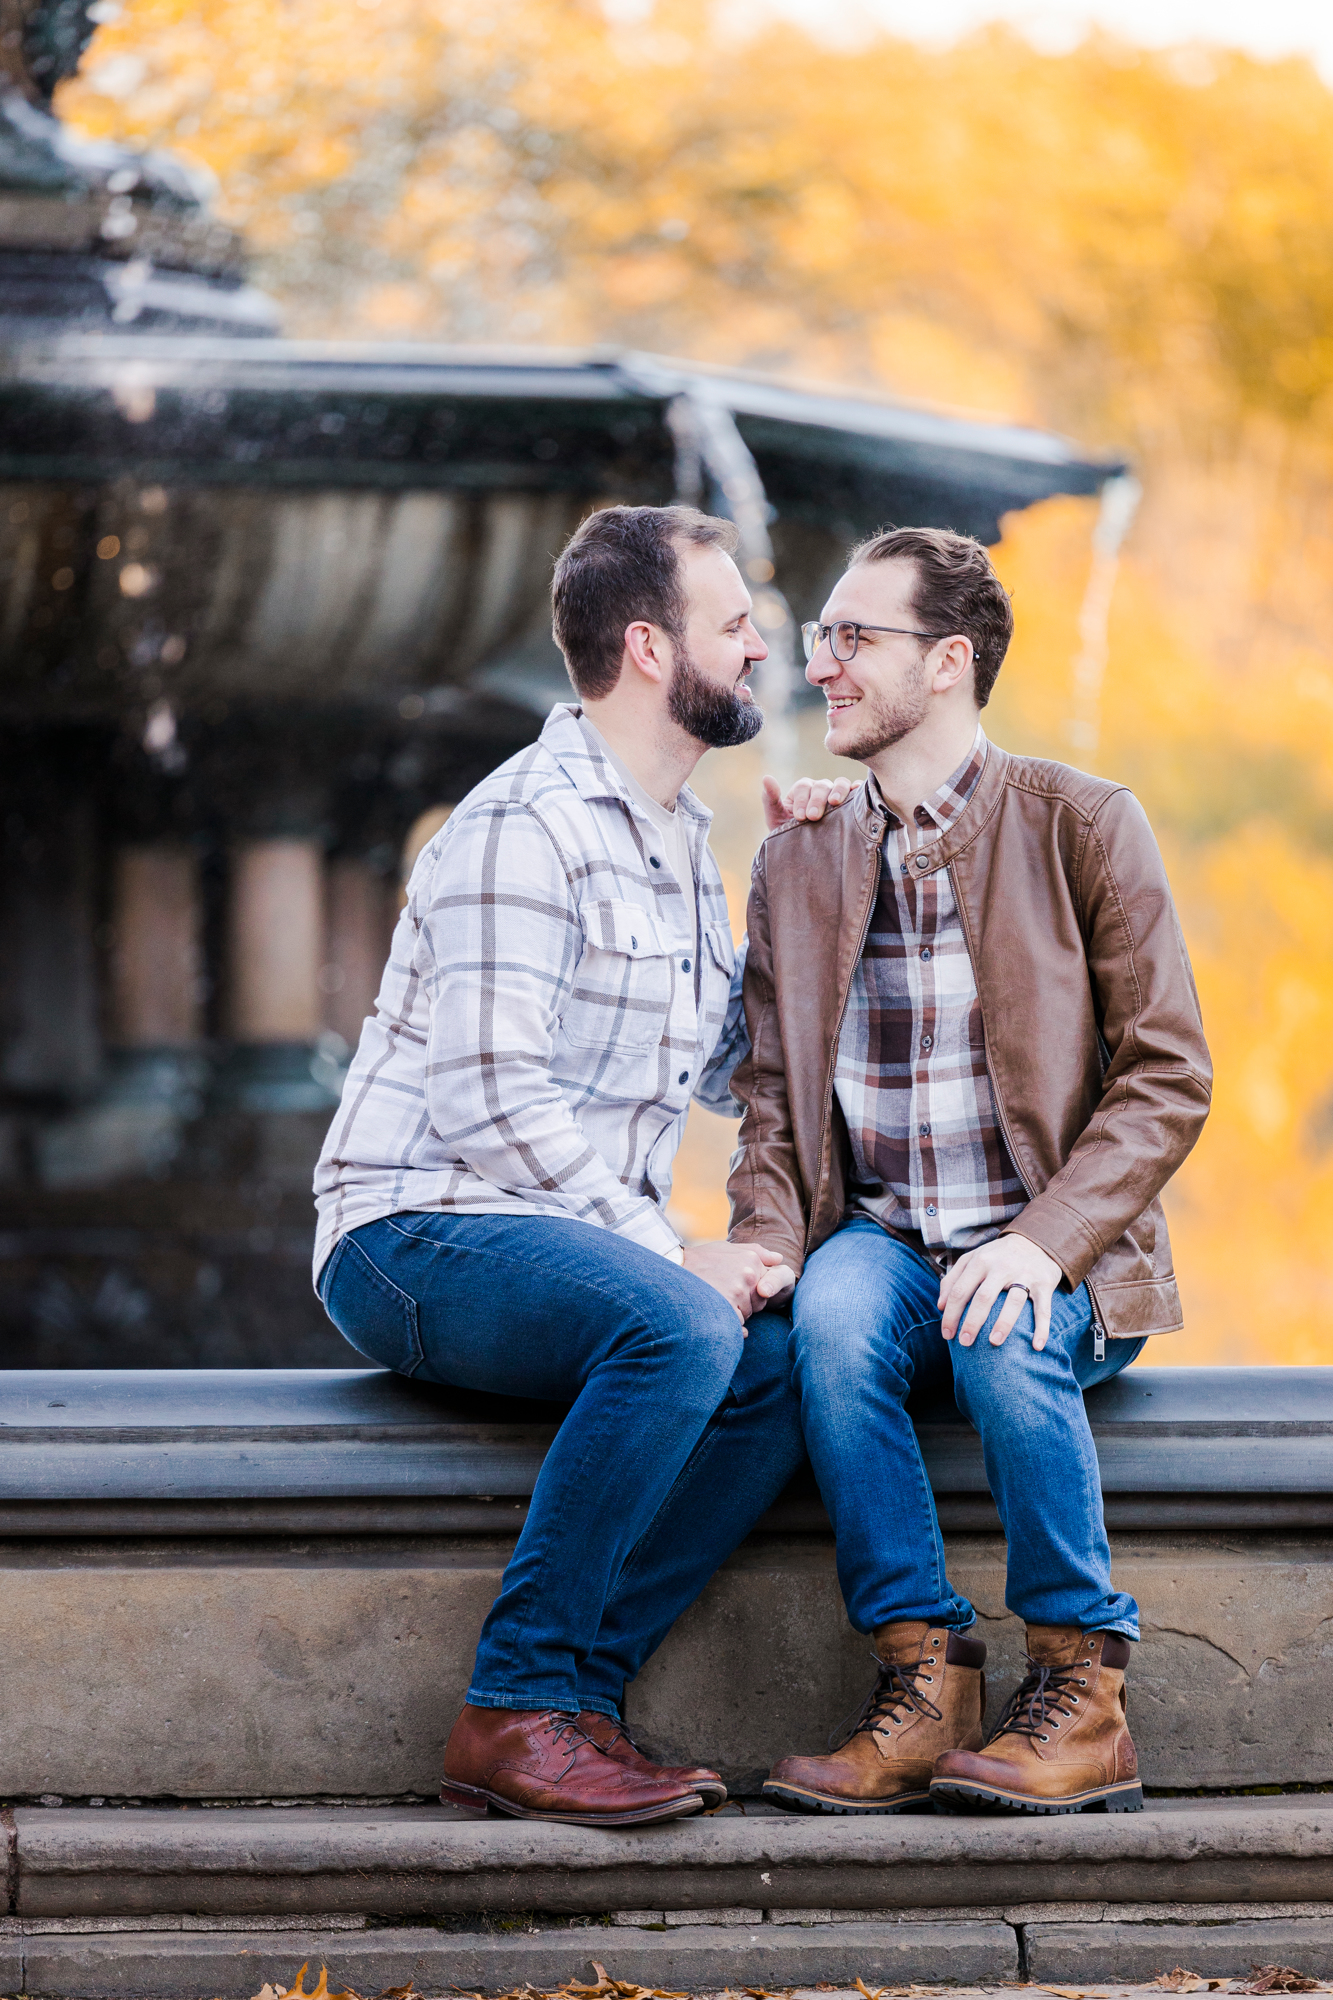 Joyful Engagement Photo Shoot in Central Park